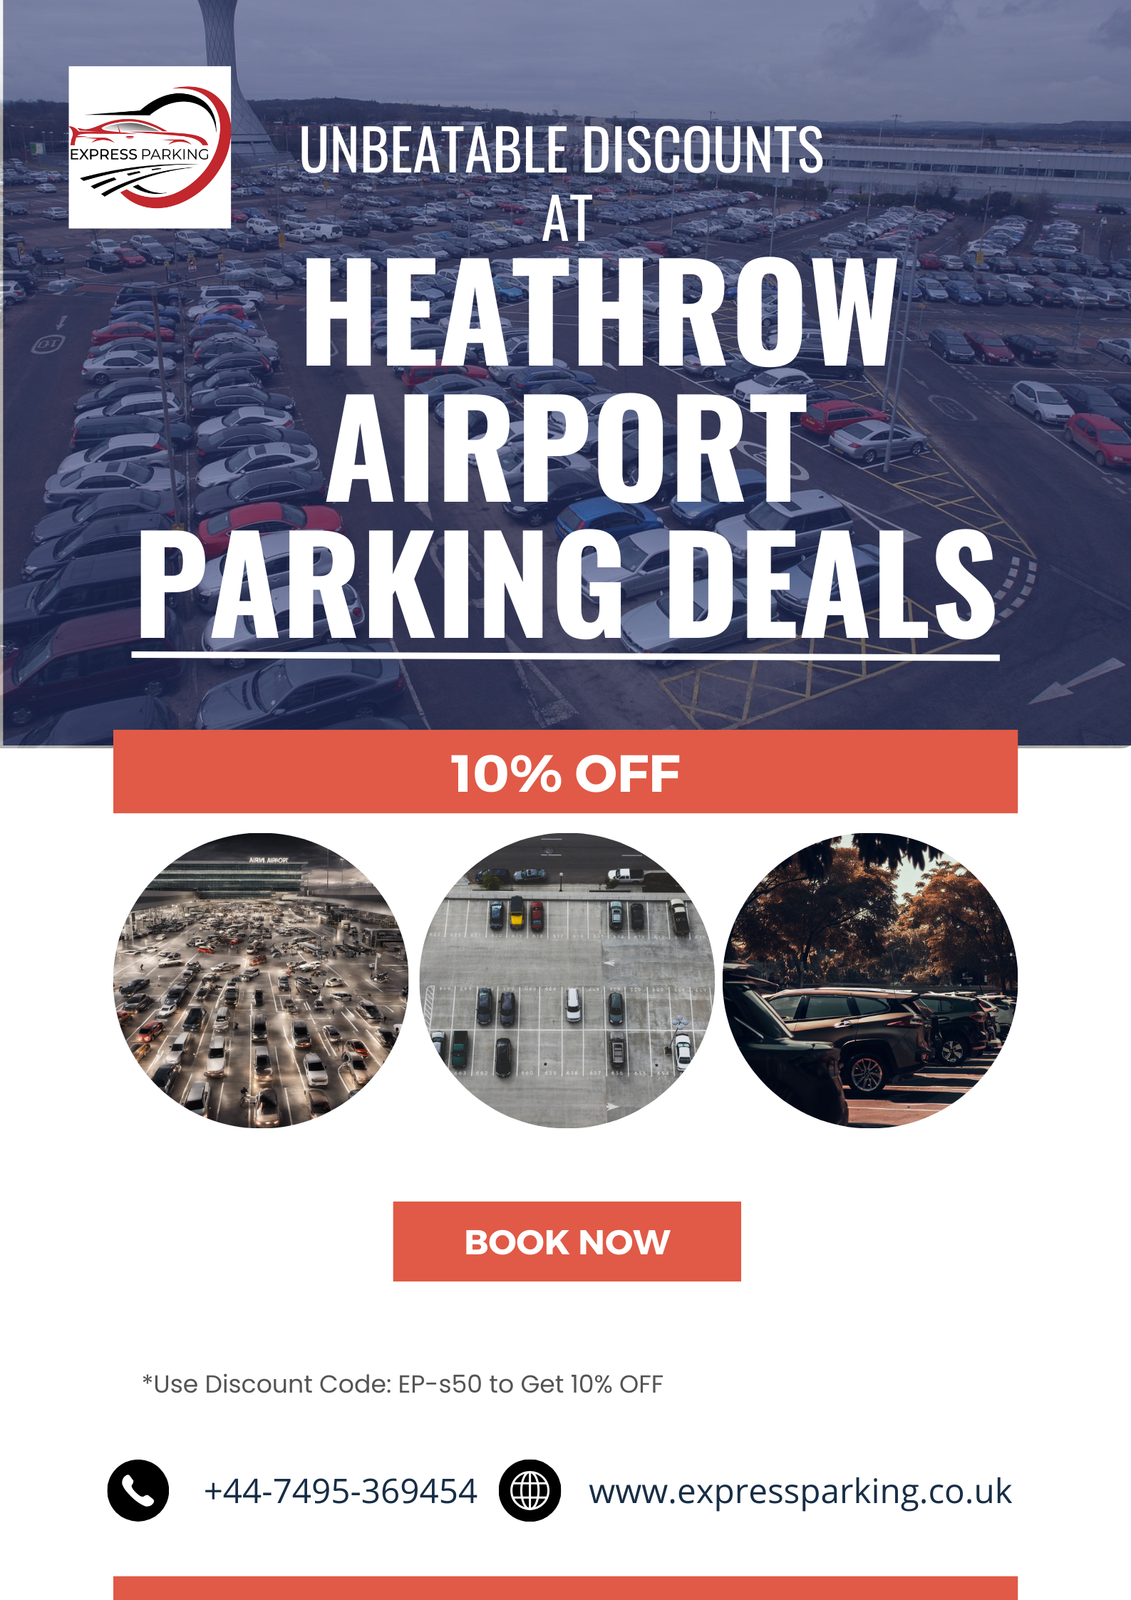 Heathrow Airport Parking Deals: Your Travel Companion